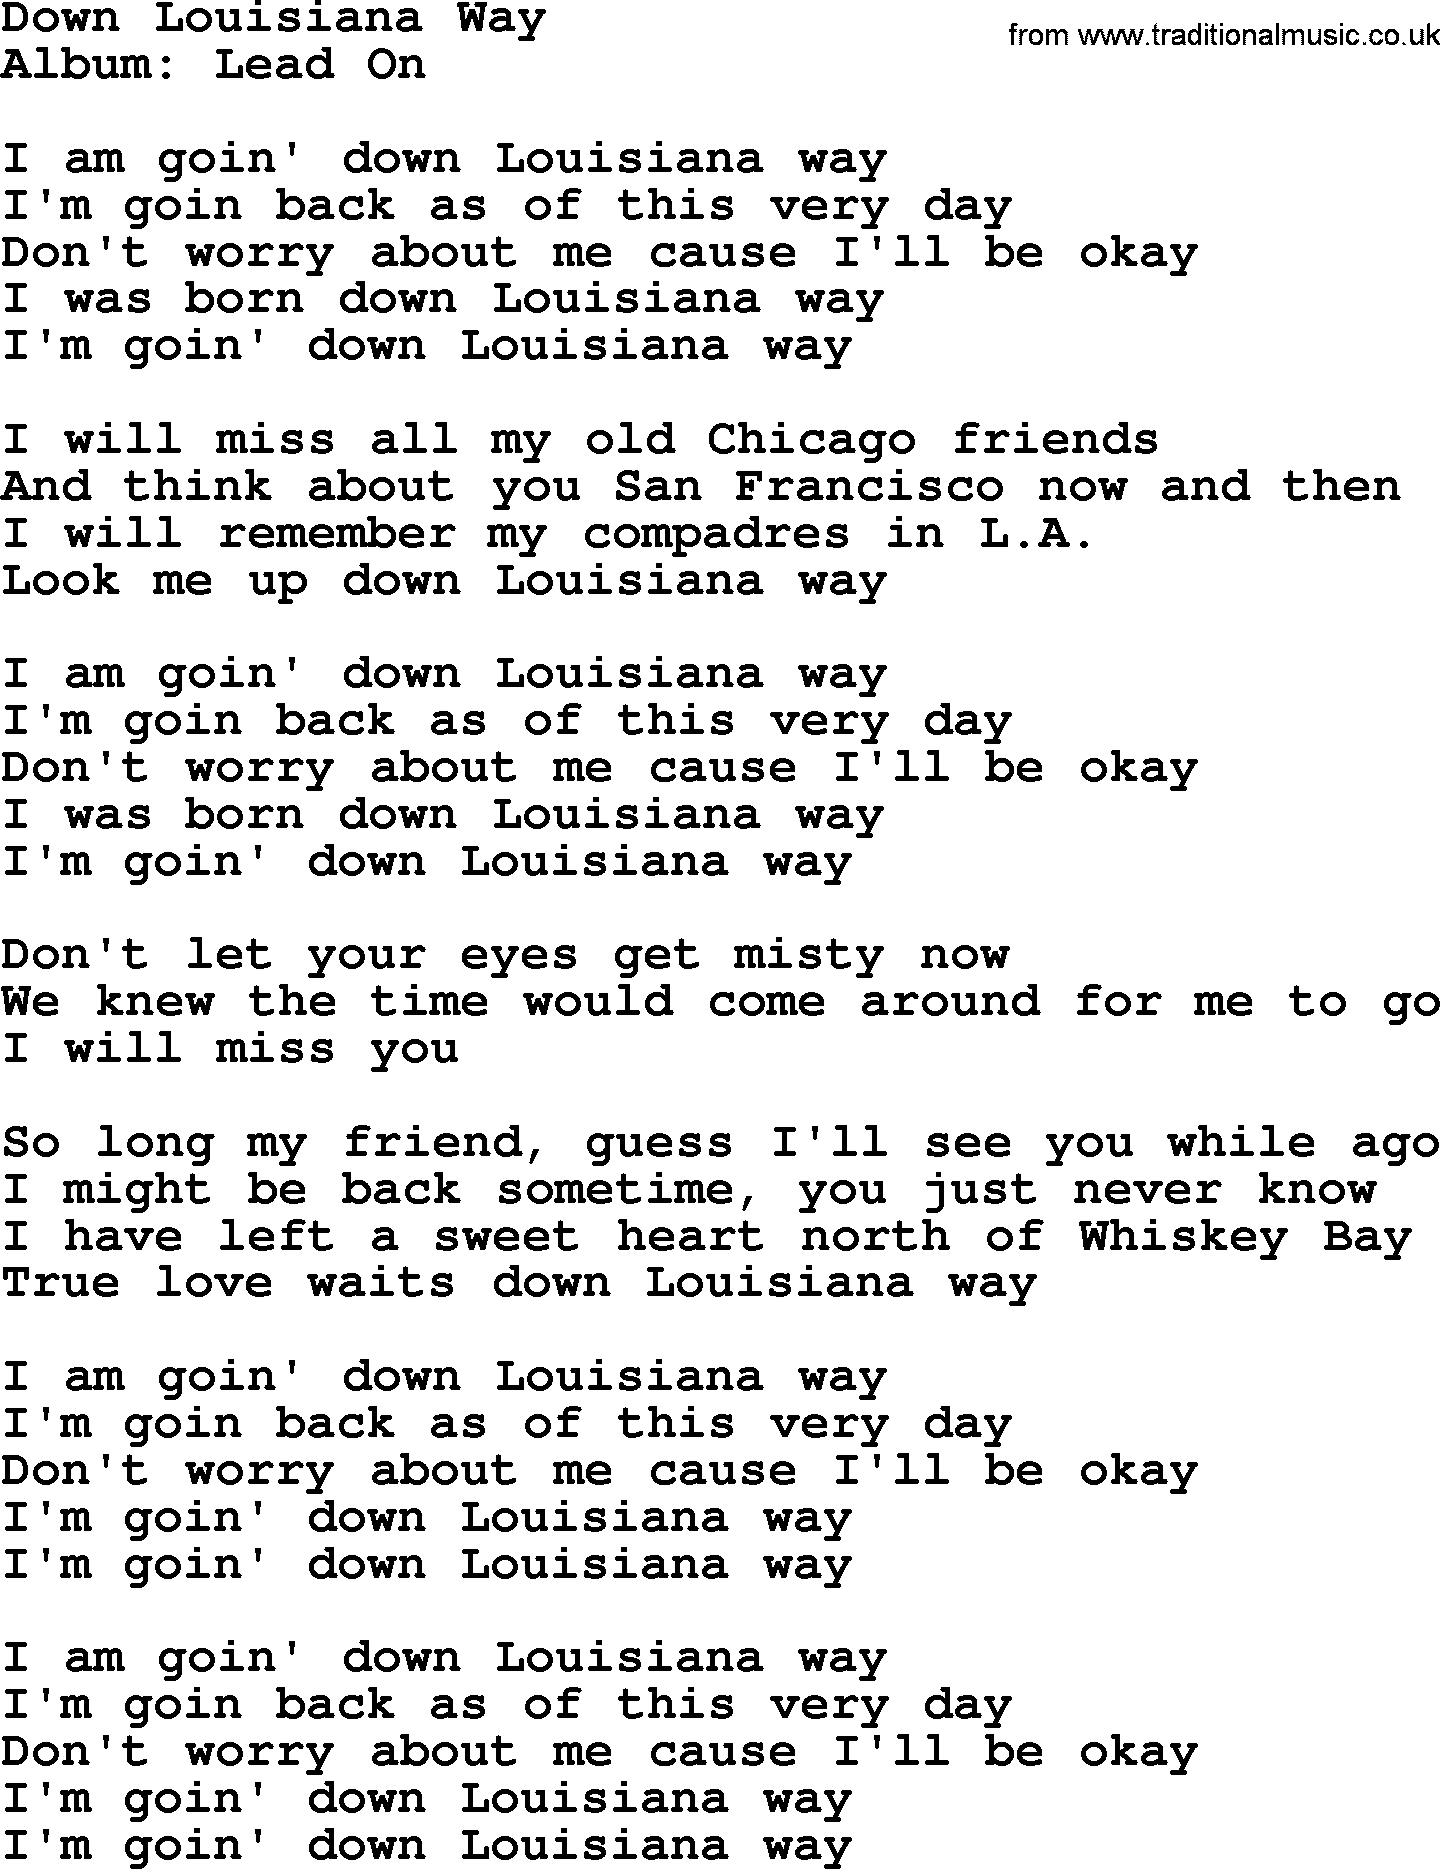 George Strait song: Down Louisiana Way, lyrics